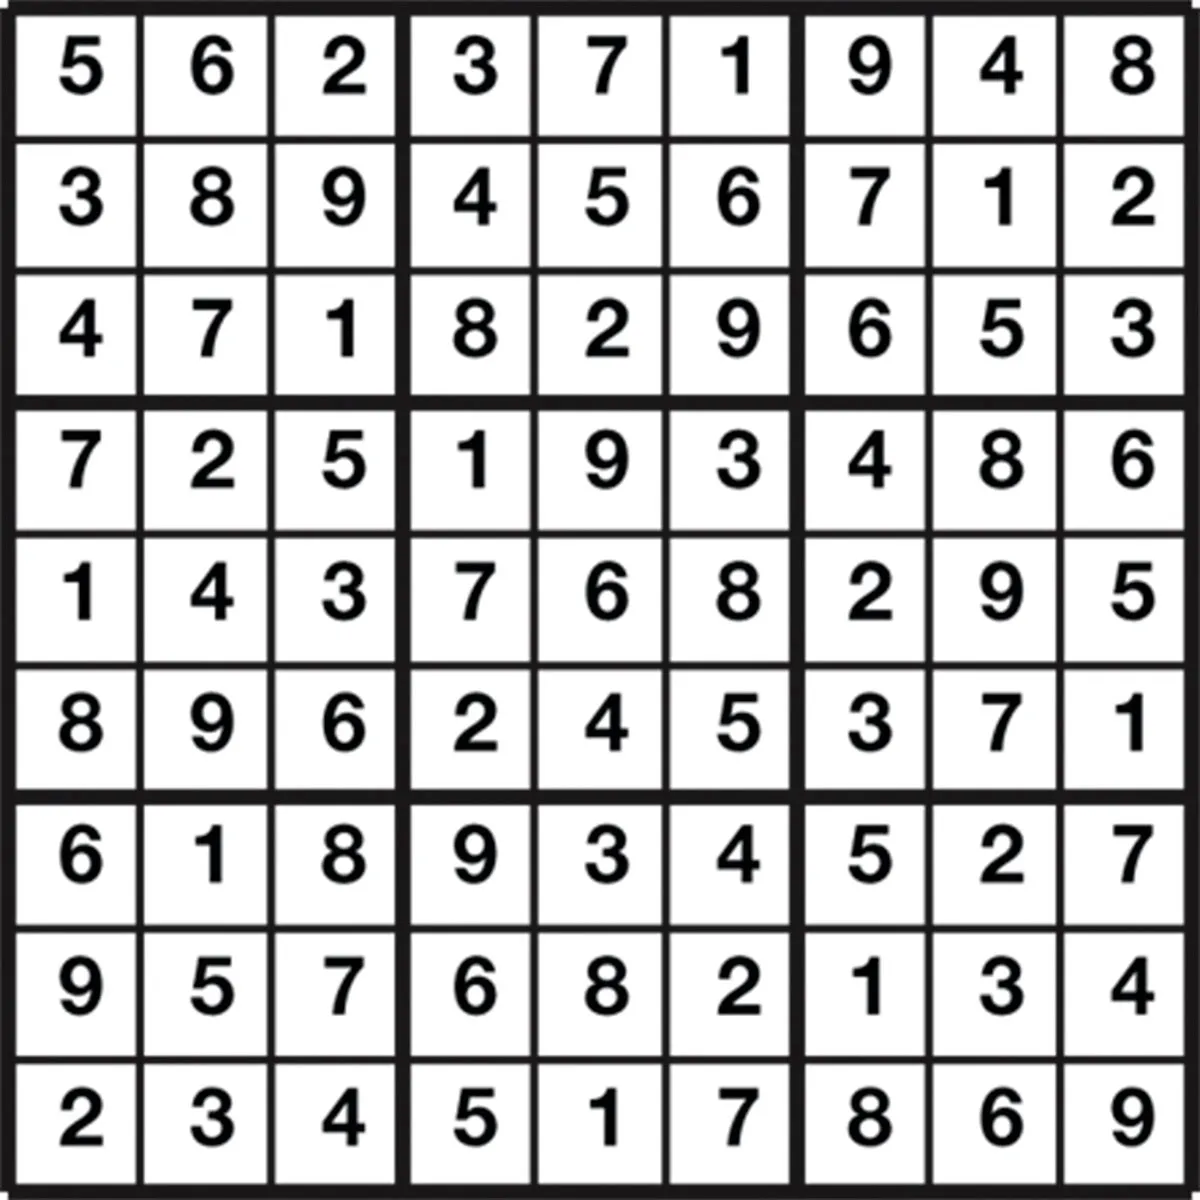 Sudoku 104 solution